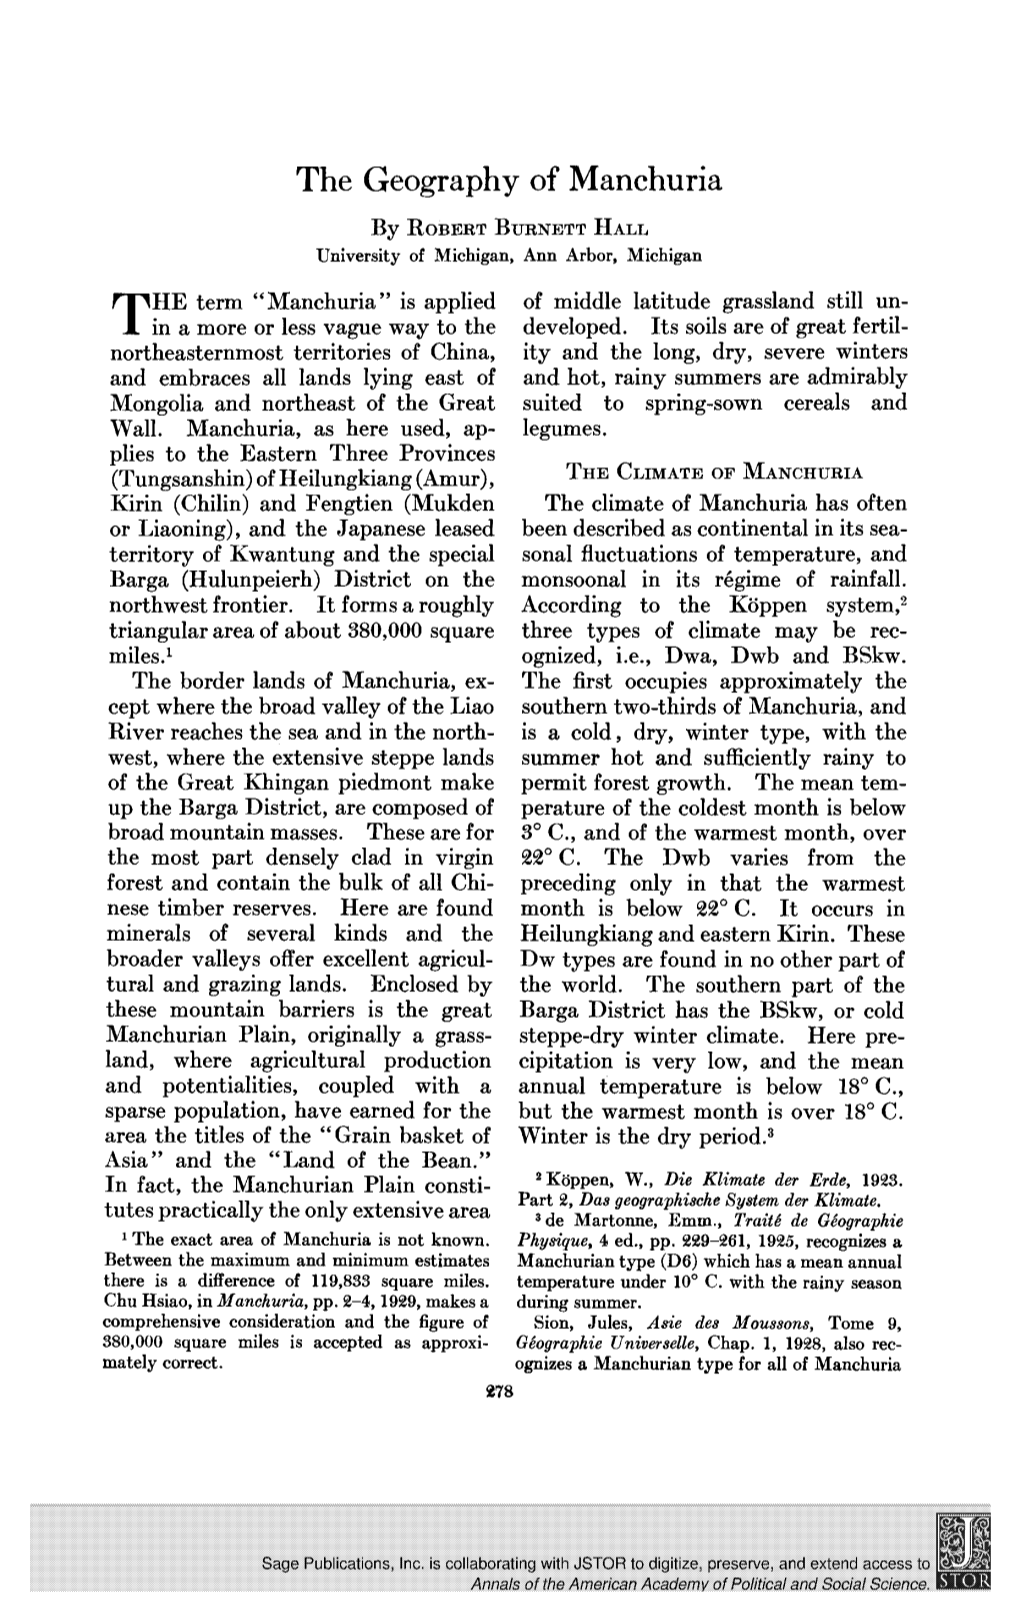 The Geography of Manchuria by ROBERT BURNETT HALL University of Michigan, Ann Arbor, Michigan